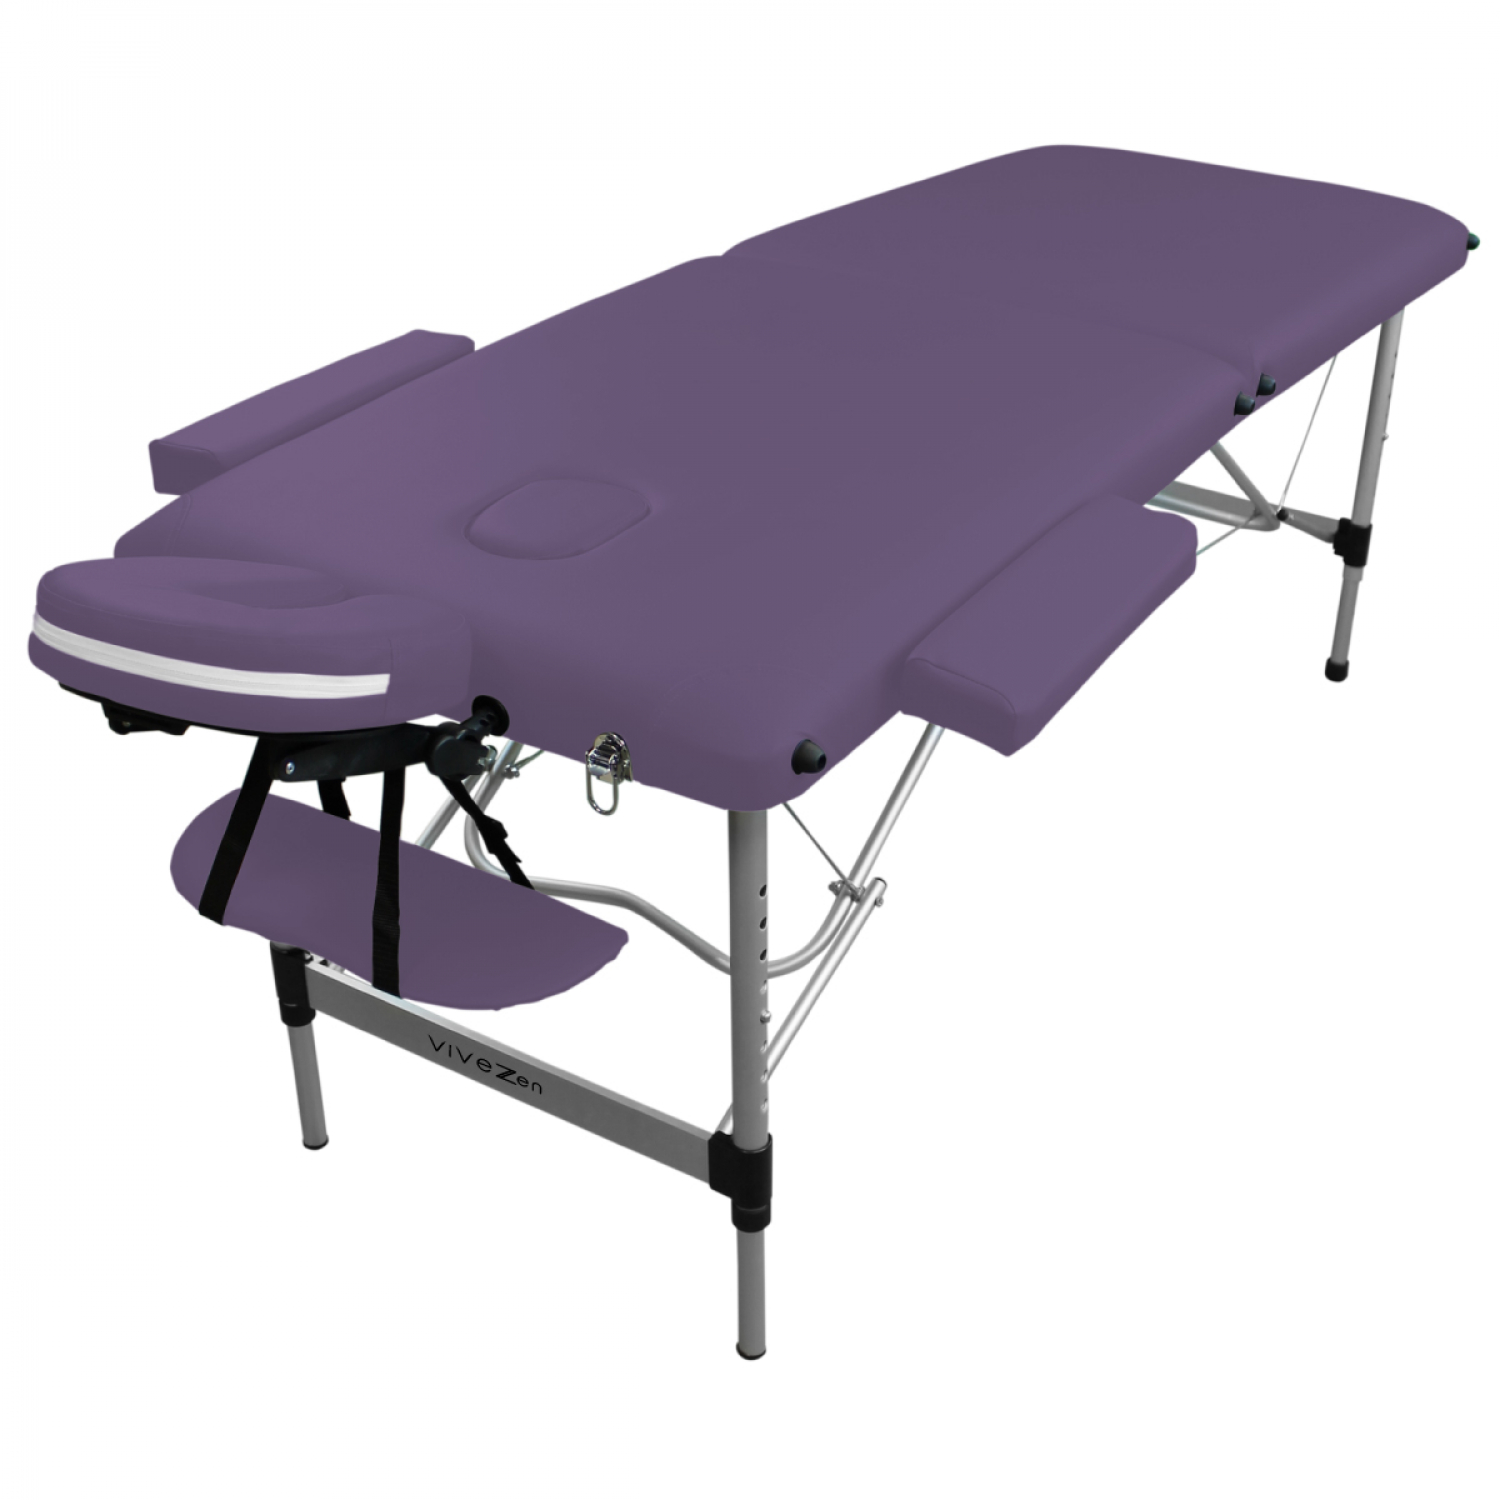 Table massage pliante 2 zones